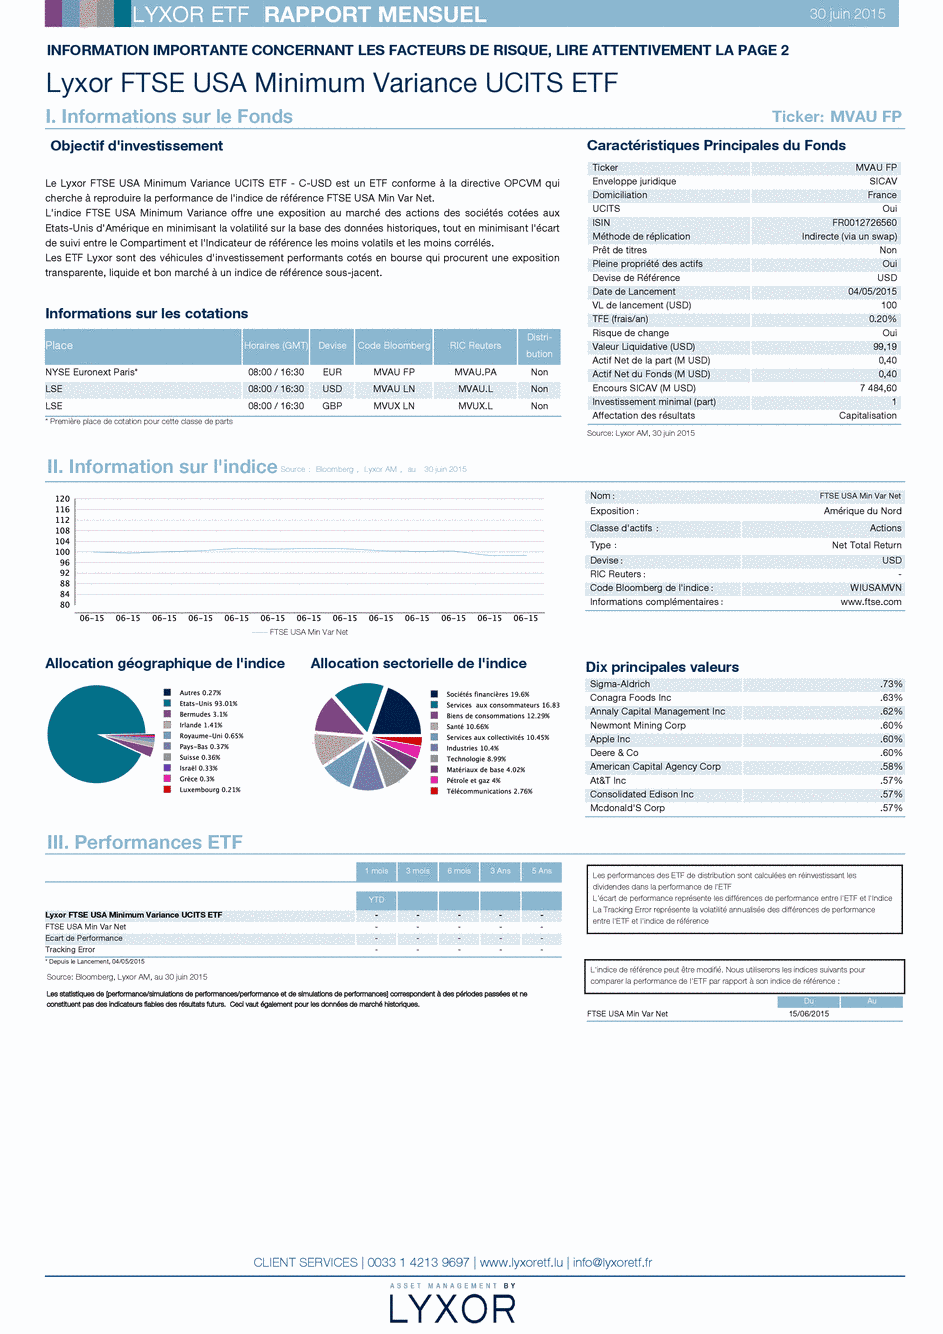 Reporting LYXOR FTSE USA MINIMUM VARIANCE UCITS ETF - C-USD - 30/06/2015 - Français